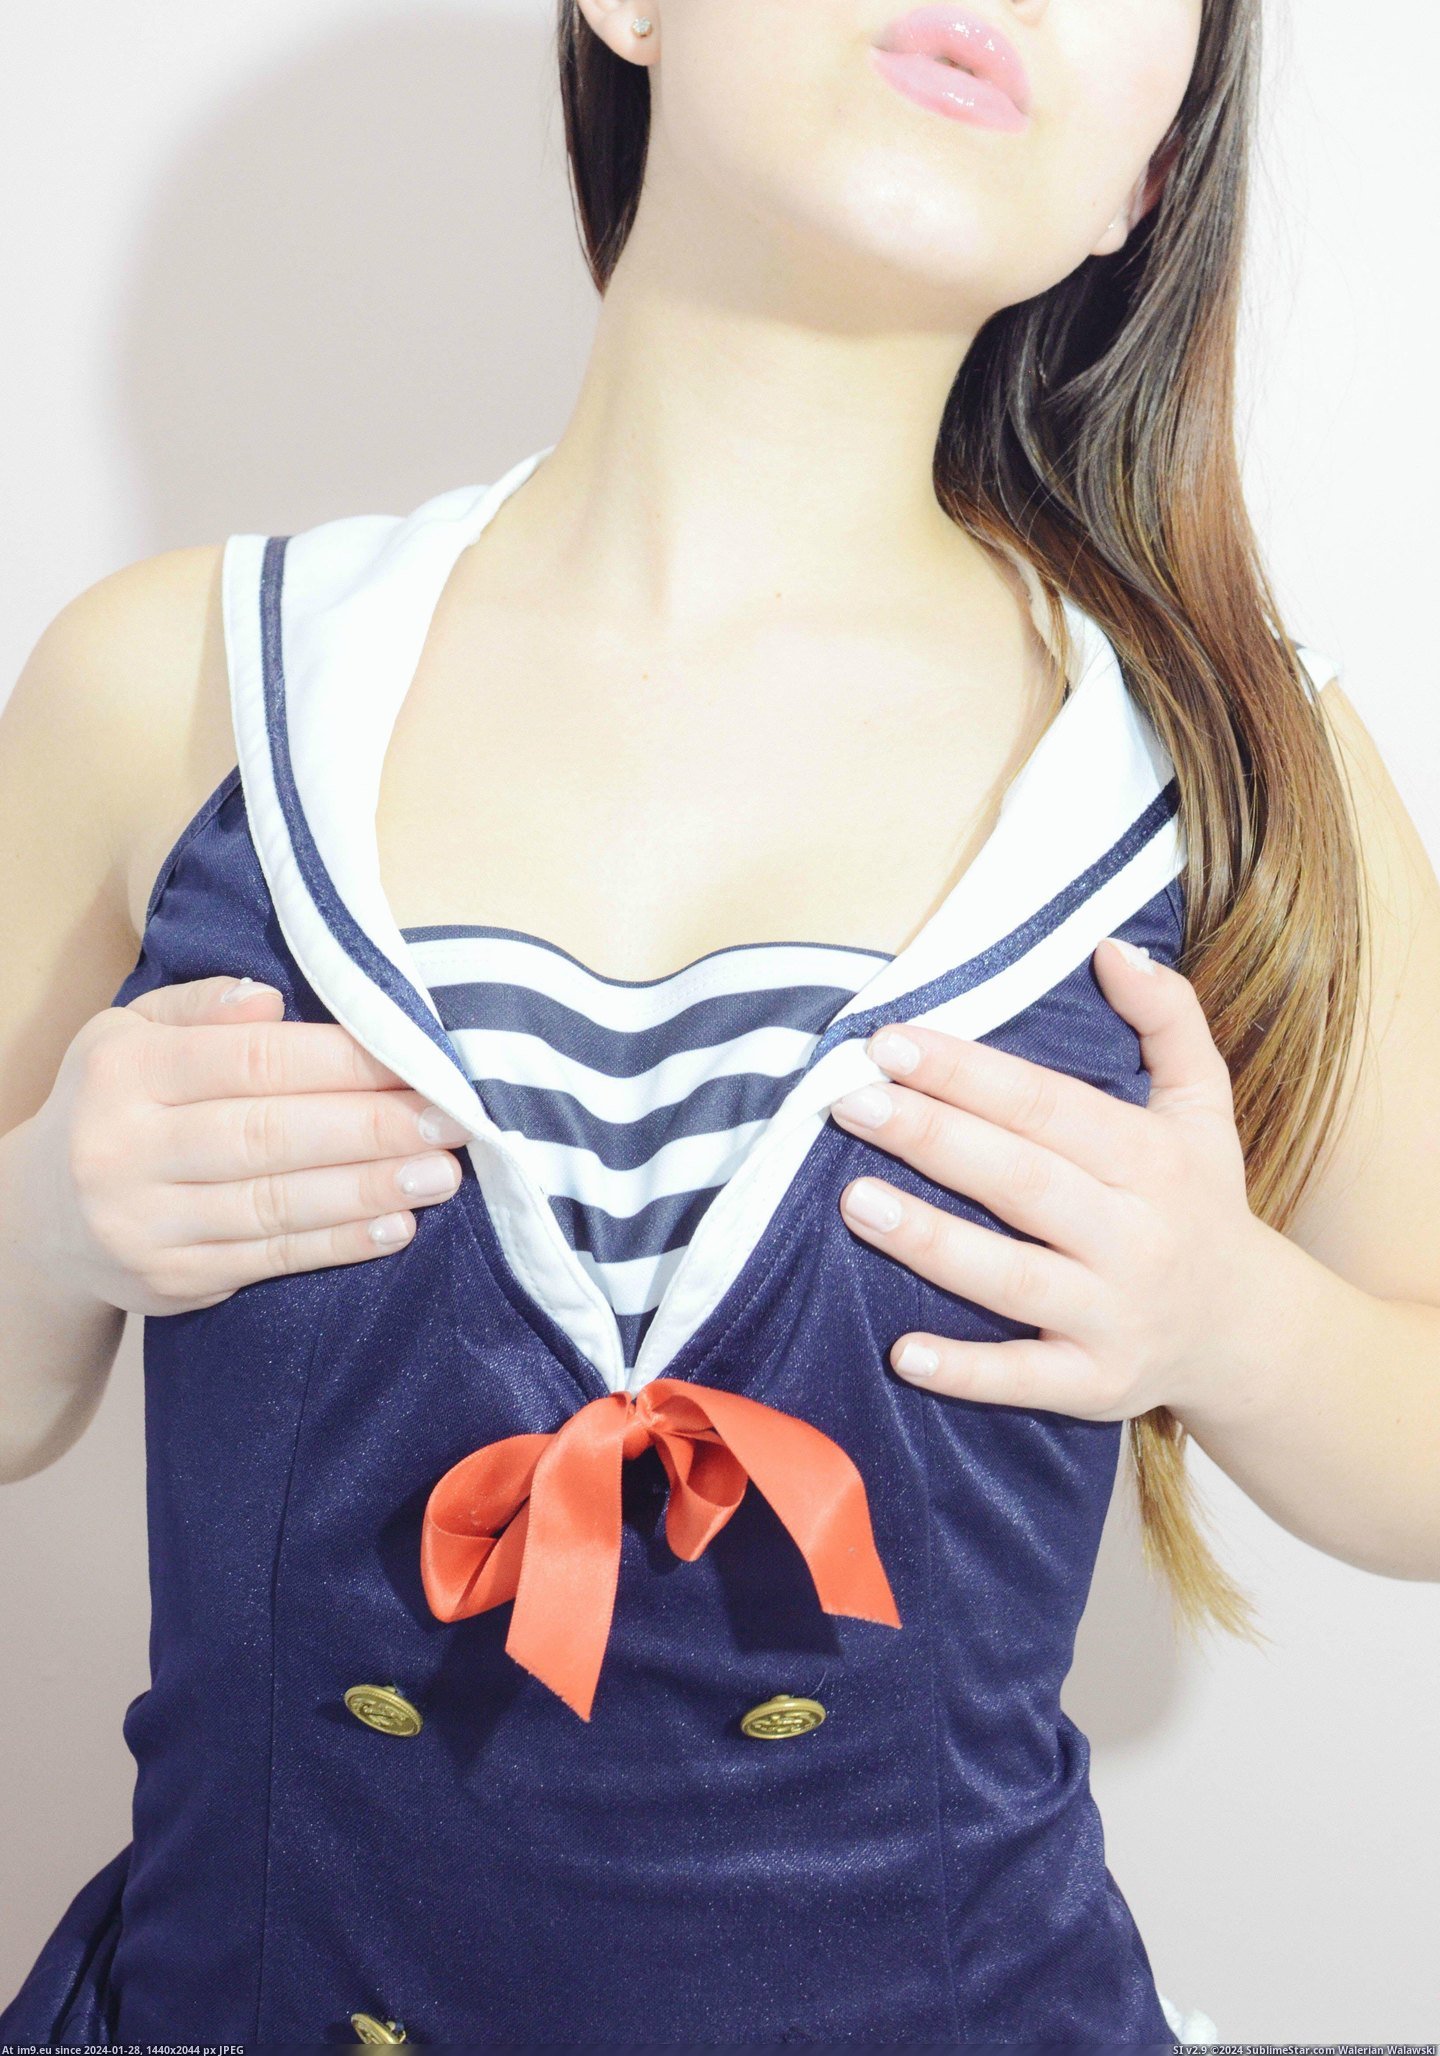 #Sexy #Album #Happy #Sailor #Striptease #Halloween #Mega #Early [Gonewild] Sexy Sailor Striptease Mega Album. Happy (early) Halloween, GW! [f] 5 Pic. (Изображение из альбом My r/GONEWILD favs))